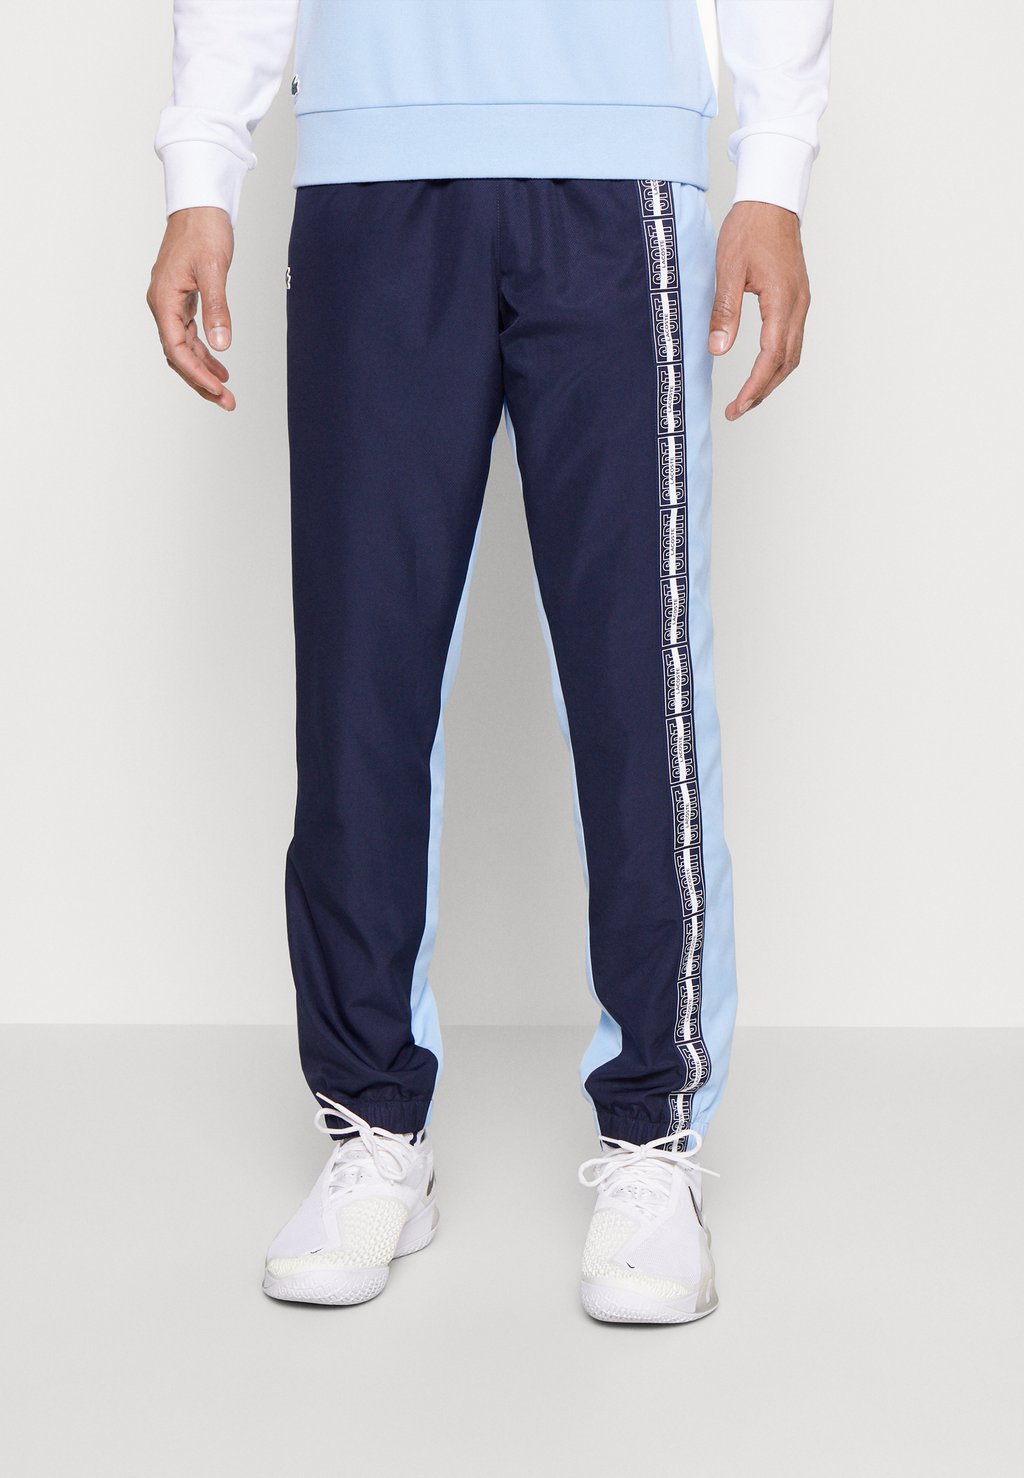 Спортивные брюки Tennis Pant Lacoste, цвет navy blue/overview спортивные шорты tennis lacoste цвет white navy blue